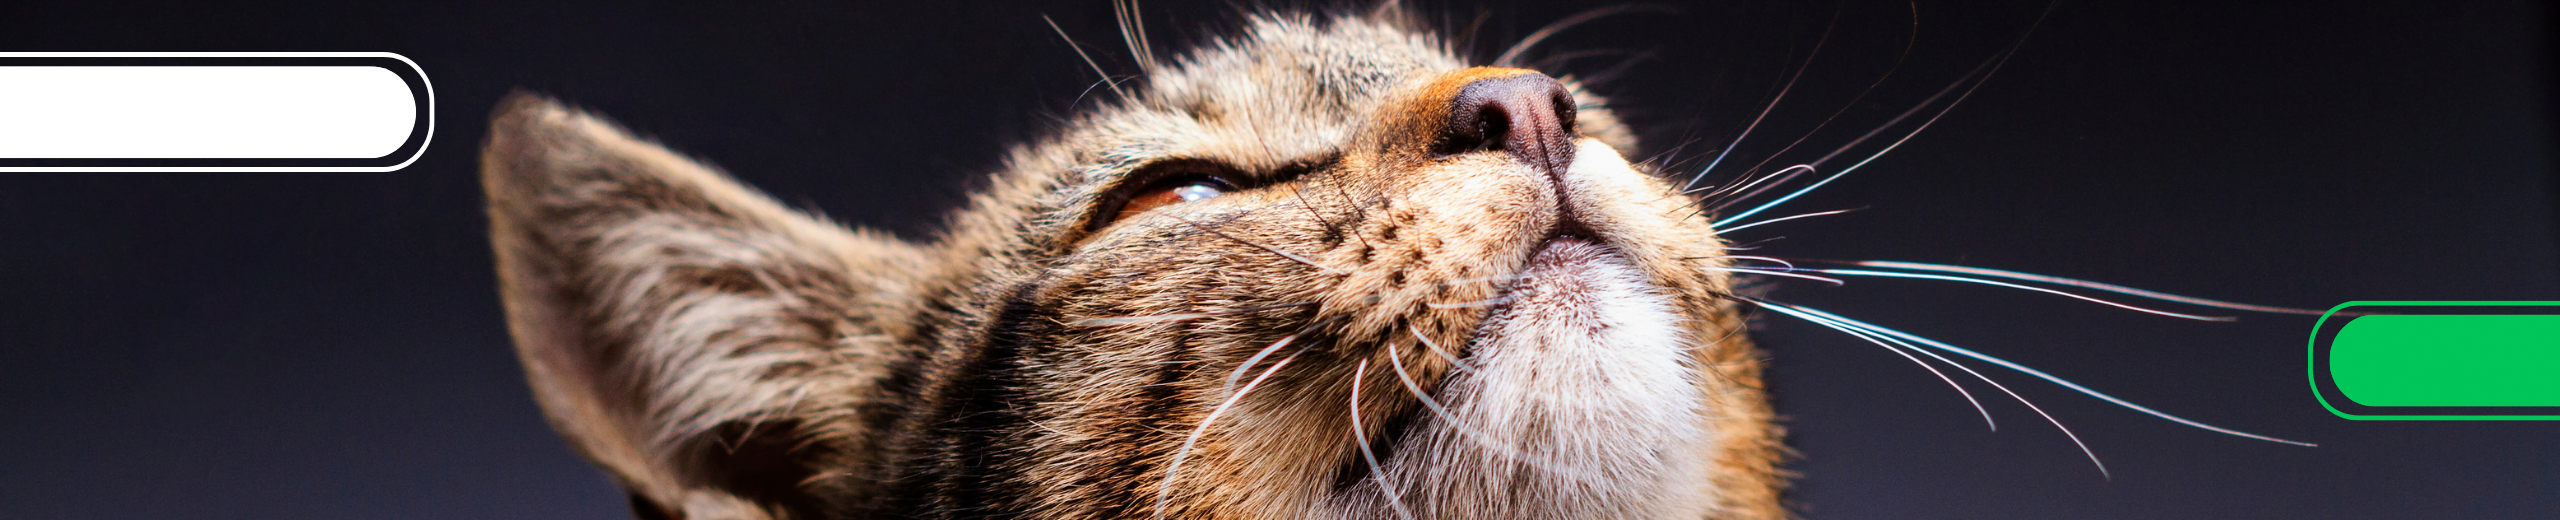 Otitis en Gatos: Abordaje Profesional y Tratamiento